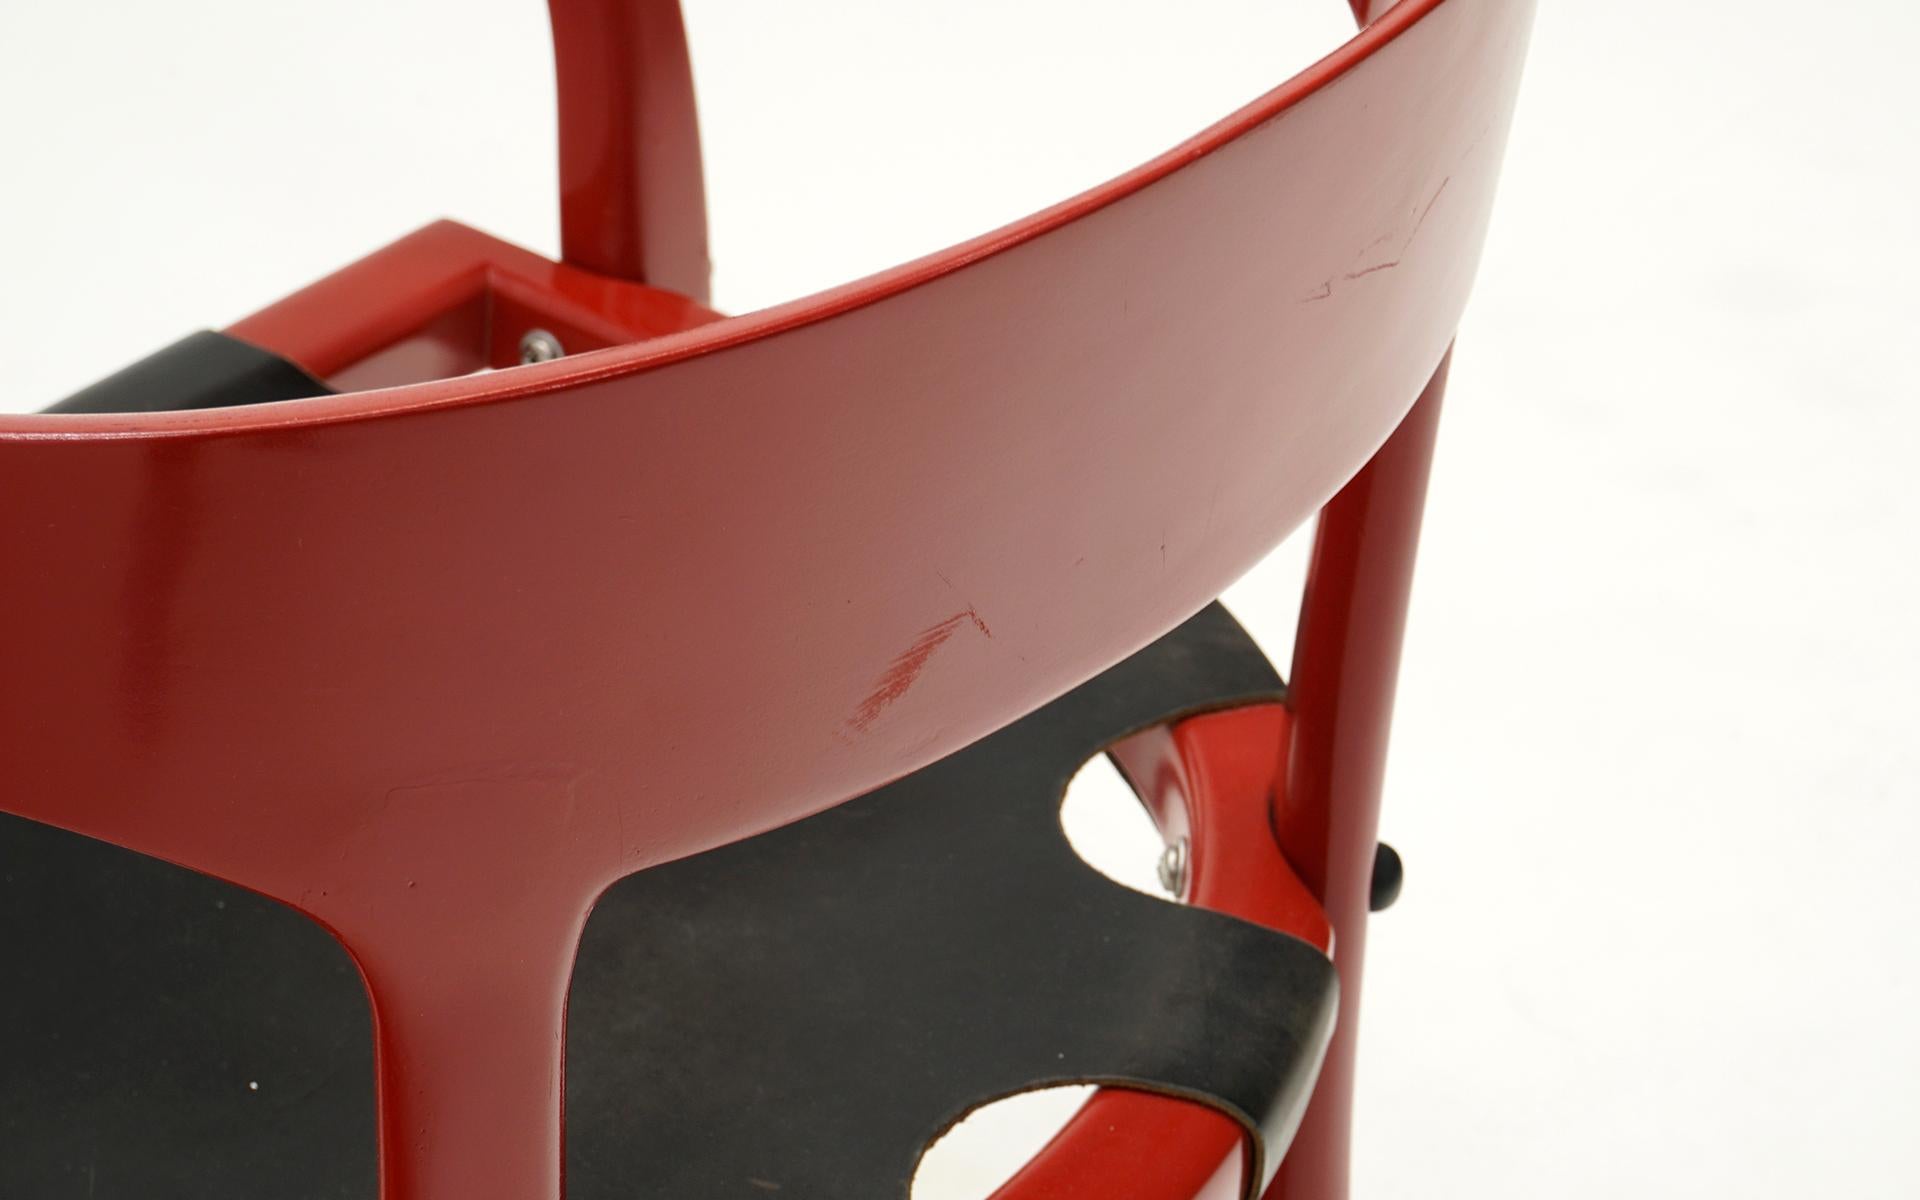  Arthur Espenet Carpenter Captains Chair. Red Lacquer, Black Leather.  Signed. For Sale 2